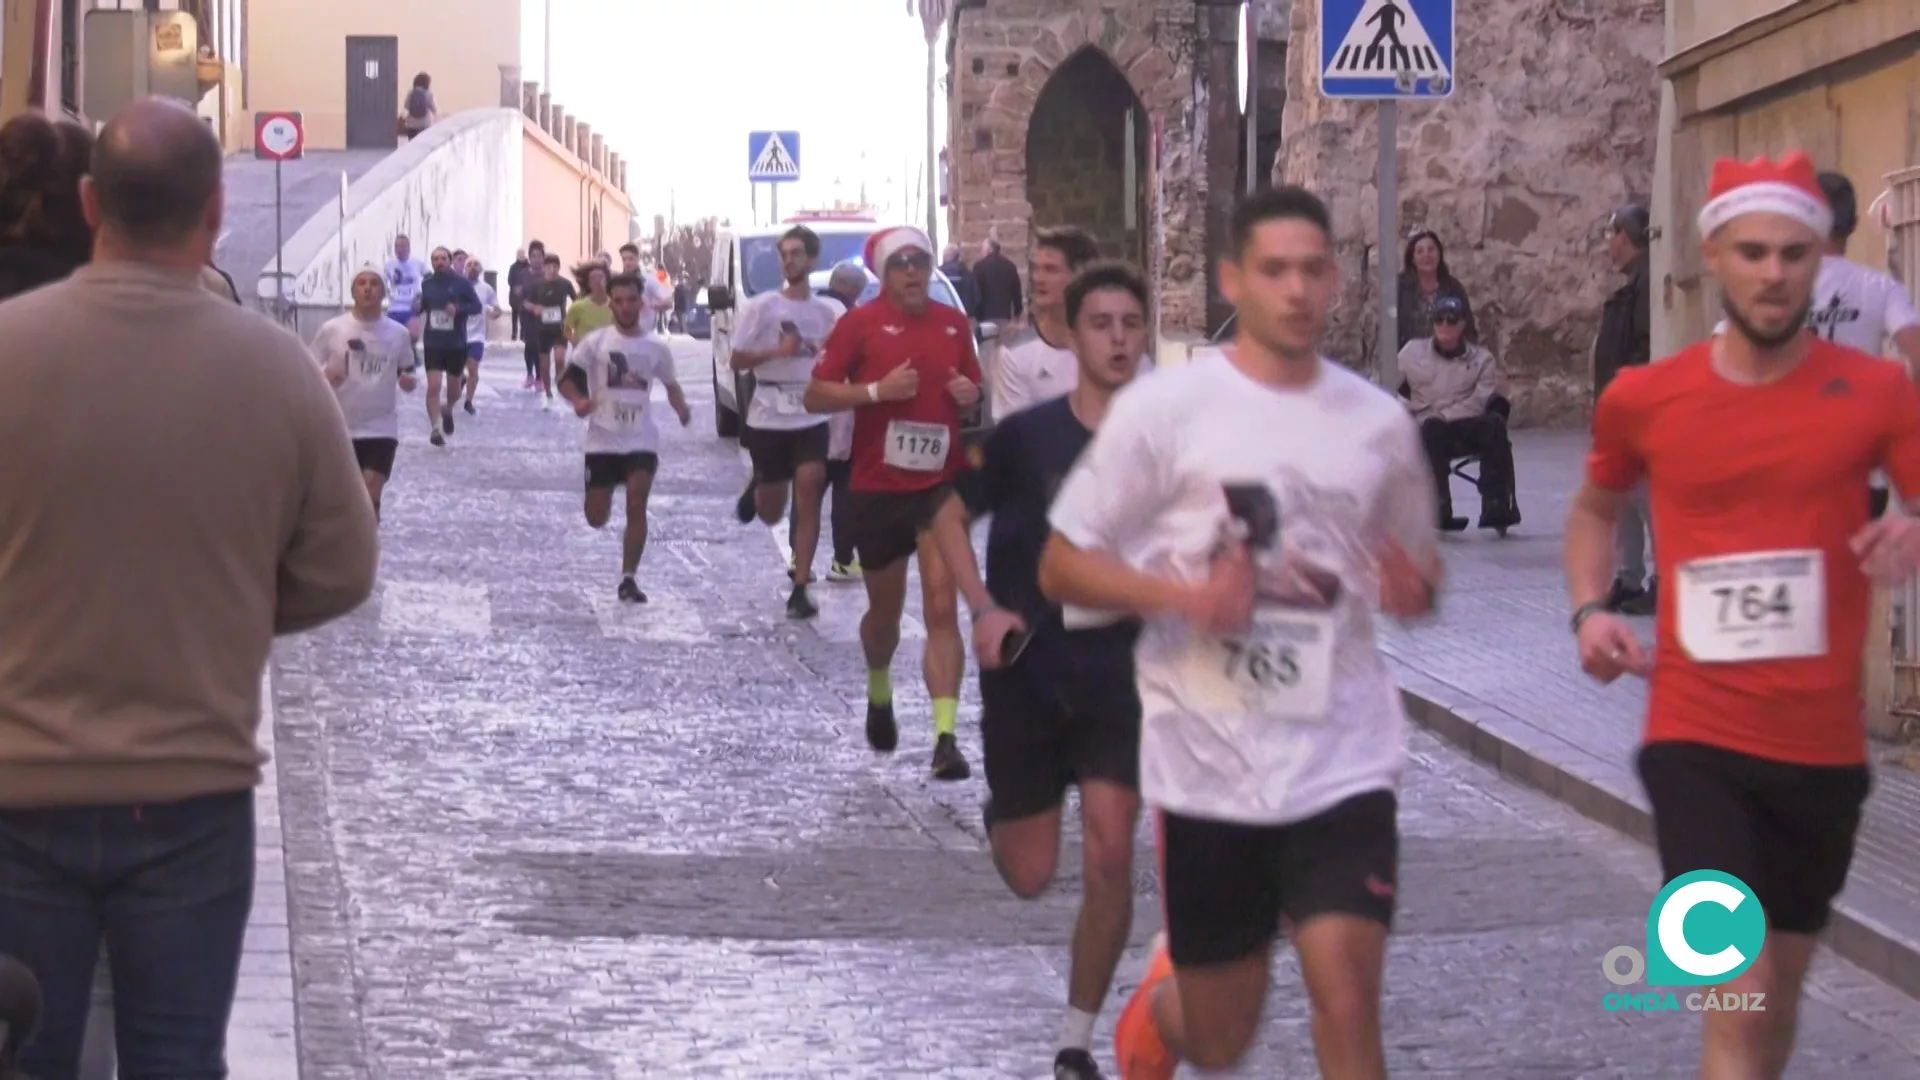 La carrera popular de la "San Silvestre ciudad de Cádiz".